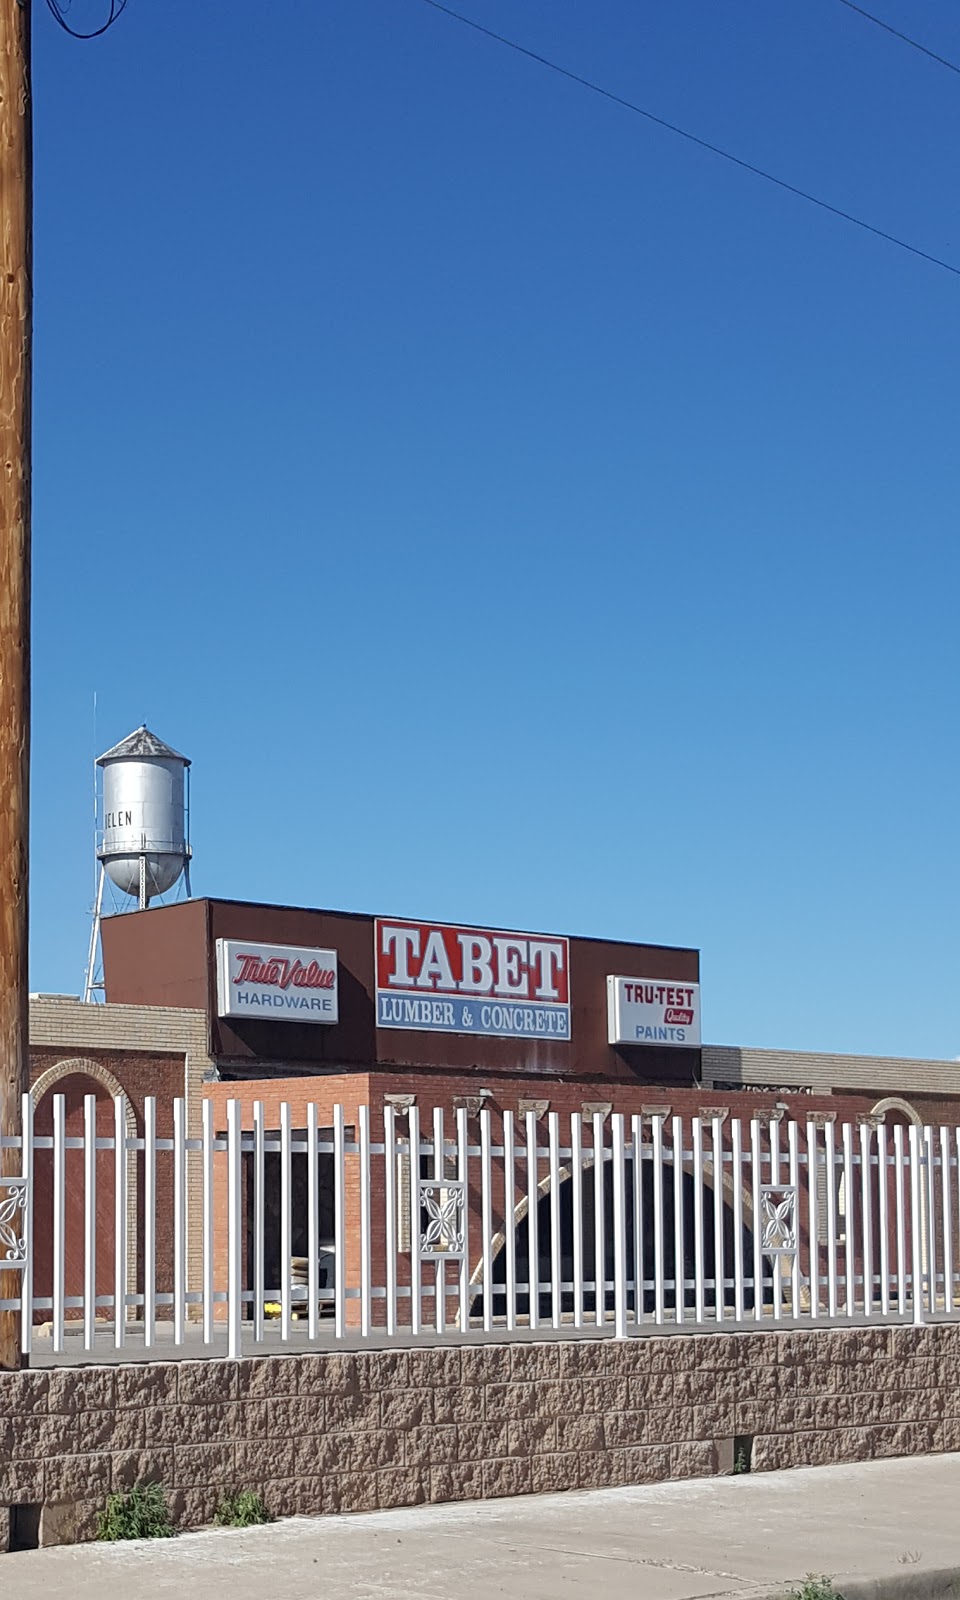 Tabet Lumber & Concrete True Value | 606 Baca Ave, Belen, NM 87002, USA | Phone: (505) 864-4478